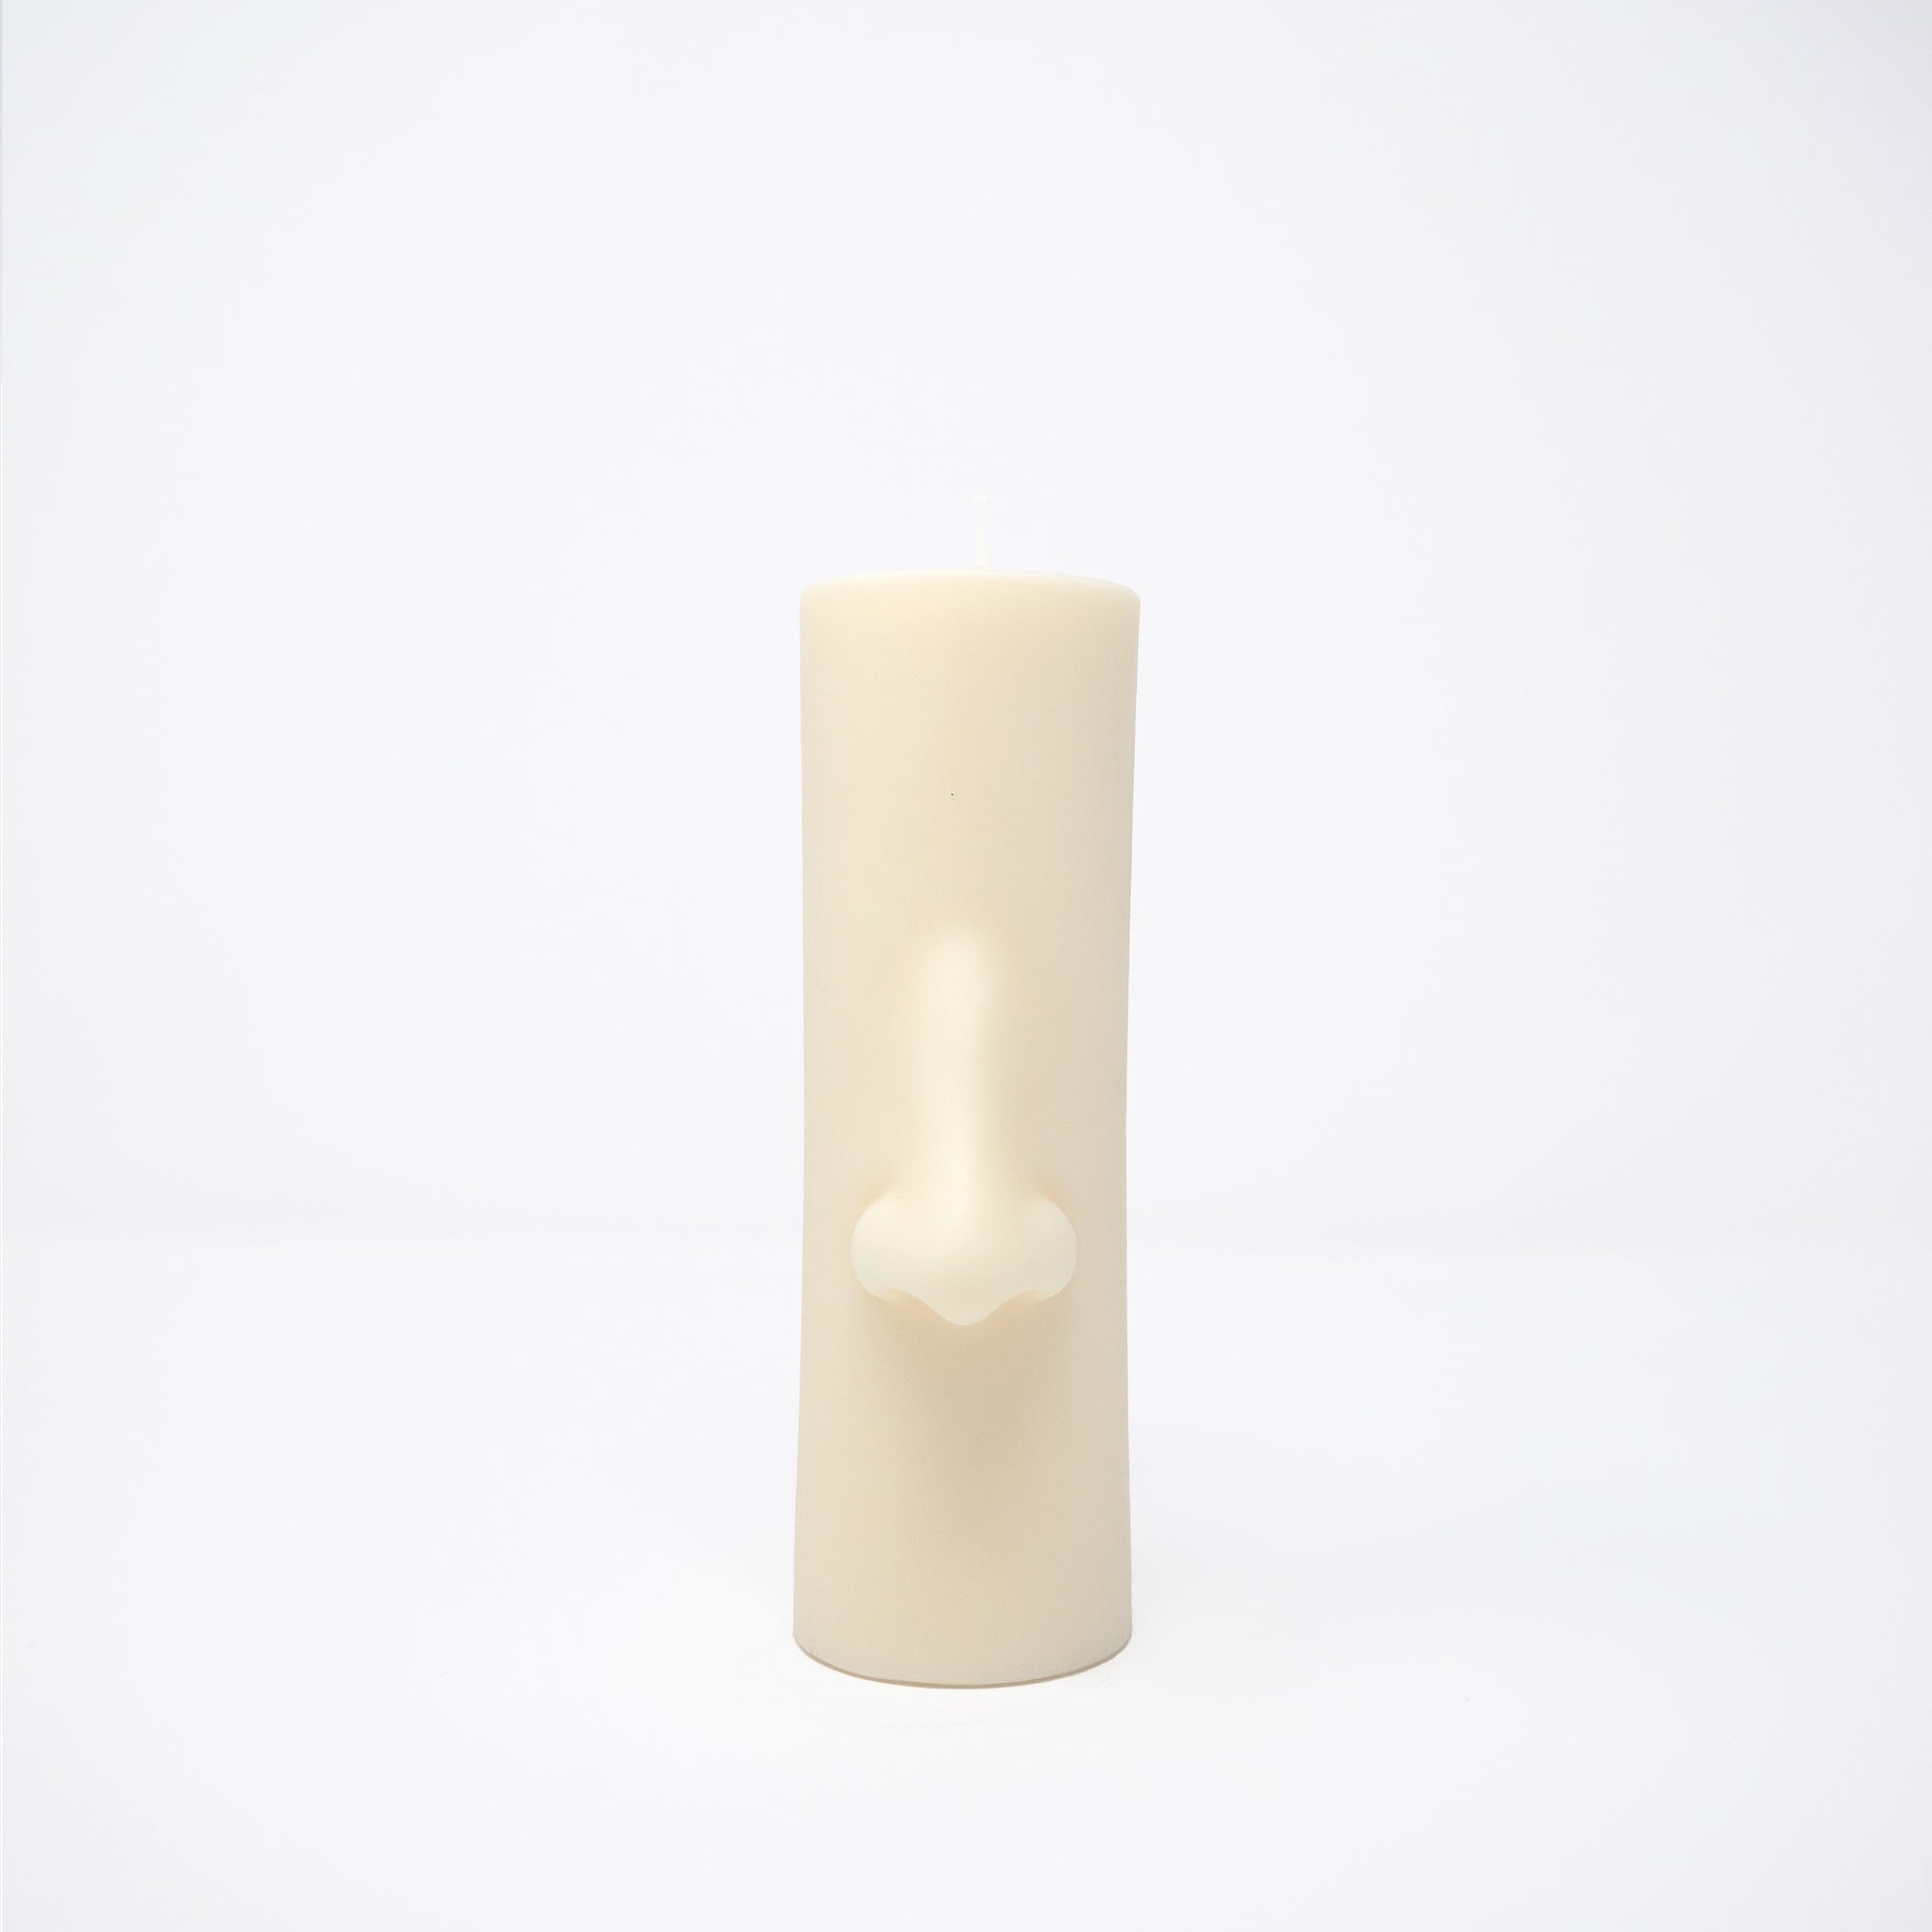 Nose Form Candle, white - Secret Location